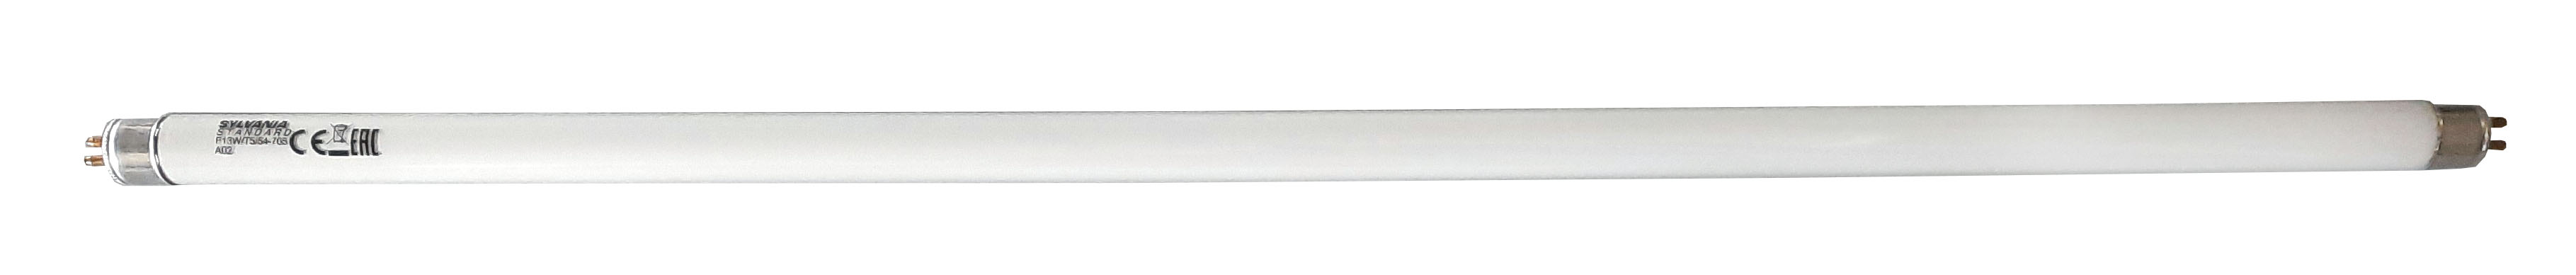 Neonröhre 51.7cm / 16mm , 13Watt